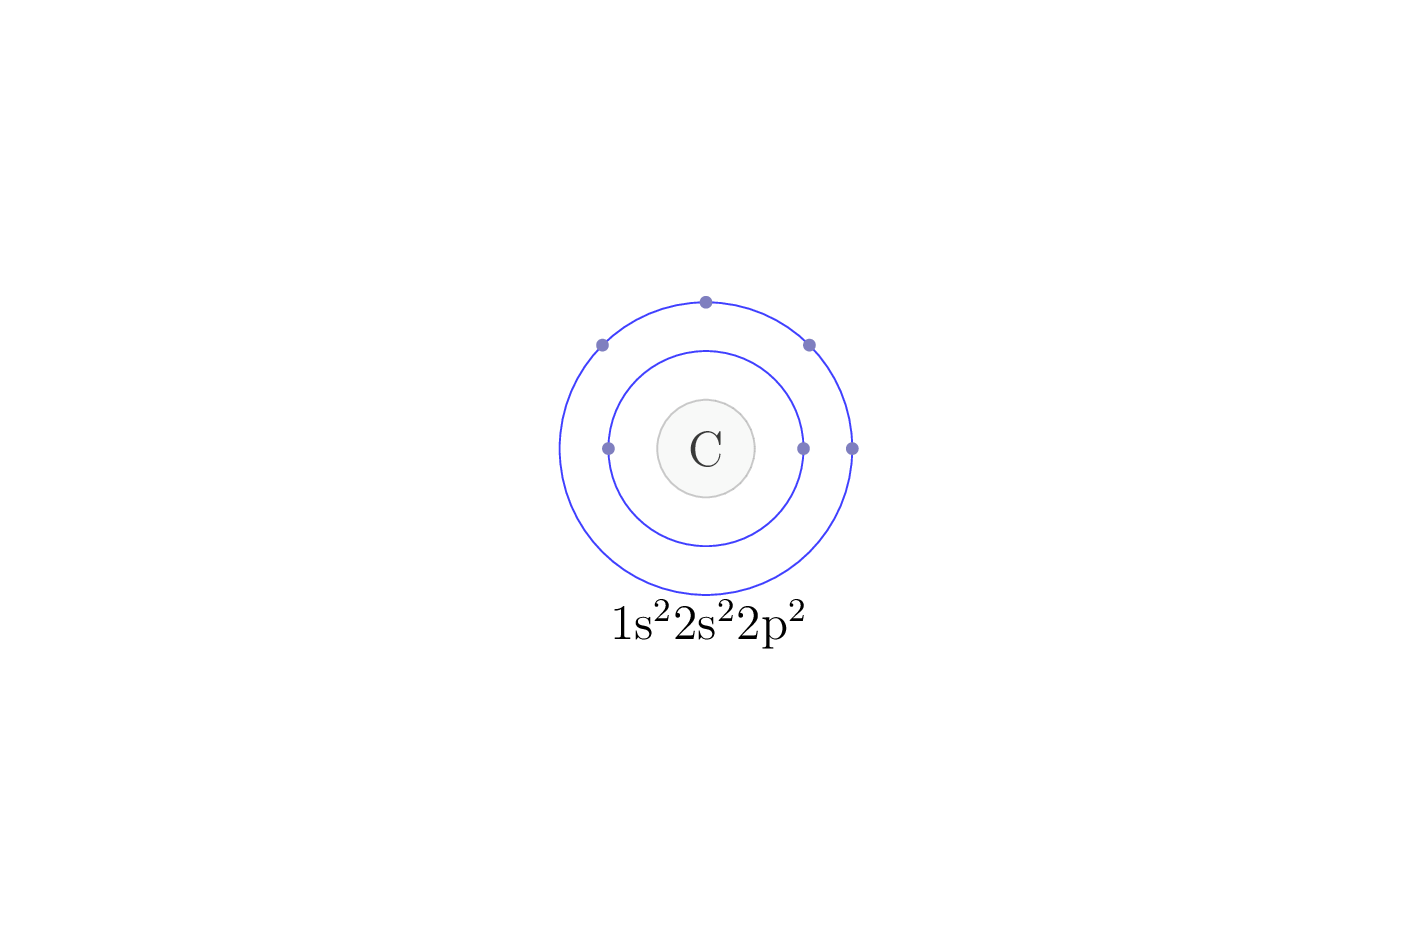 electron configuration of element C